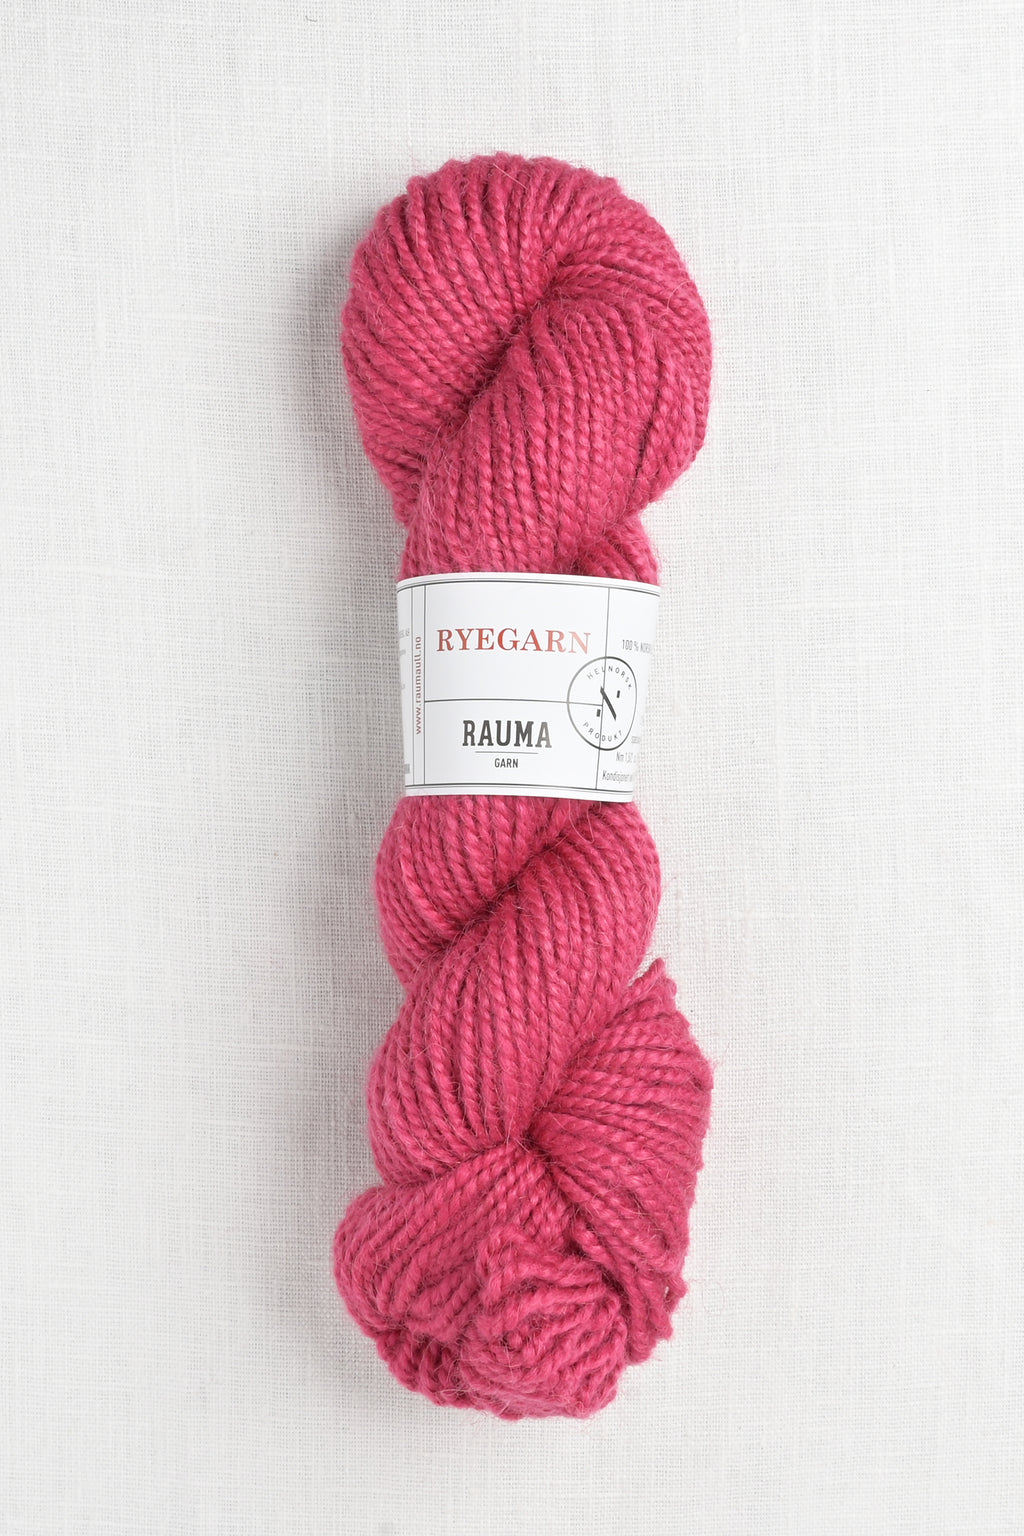 Rauma Ryegarn 545 Deep Pink